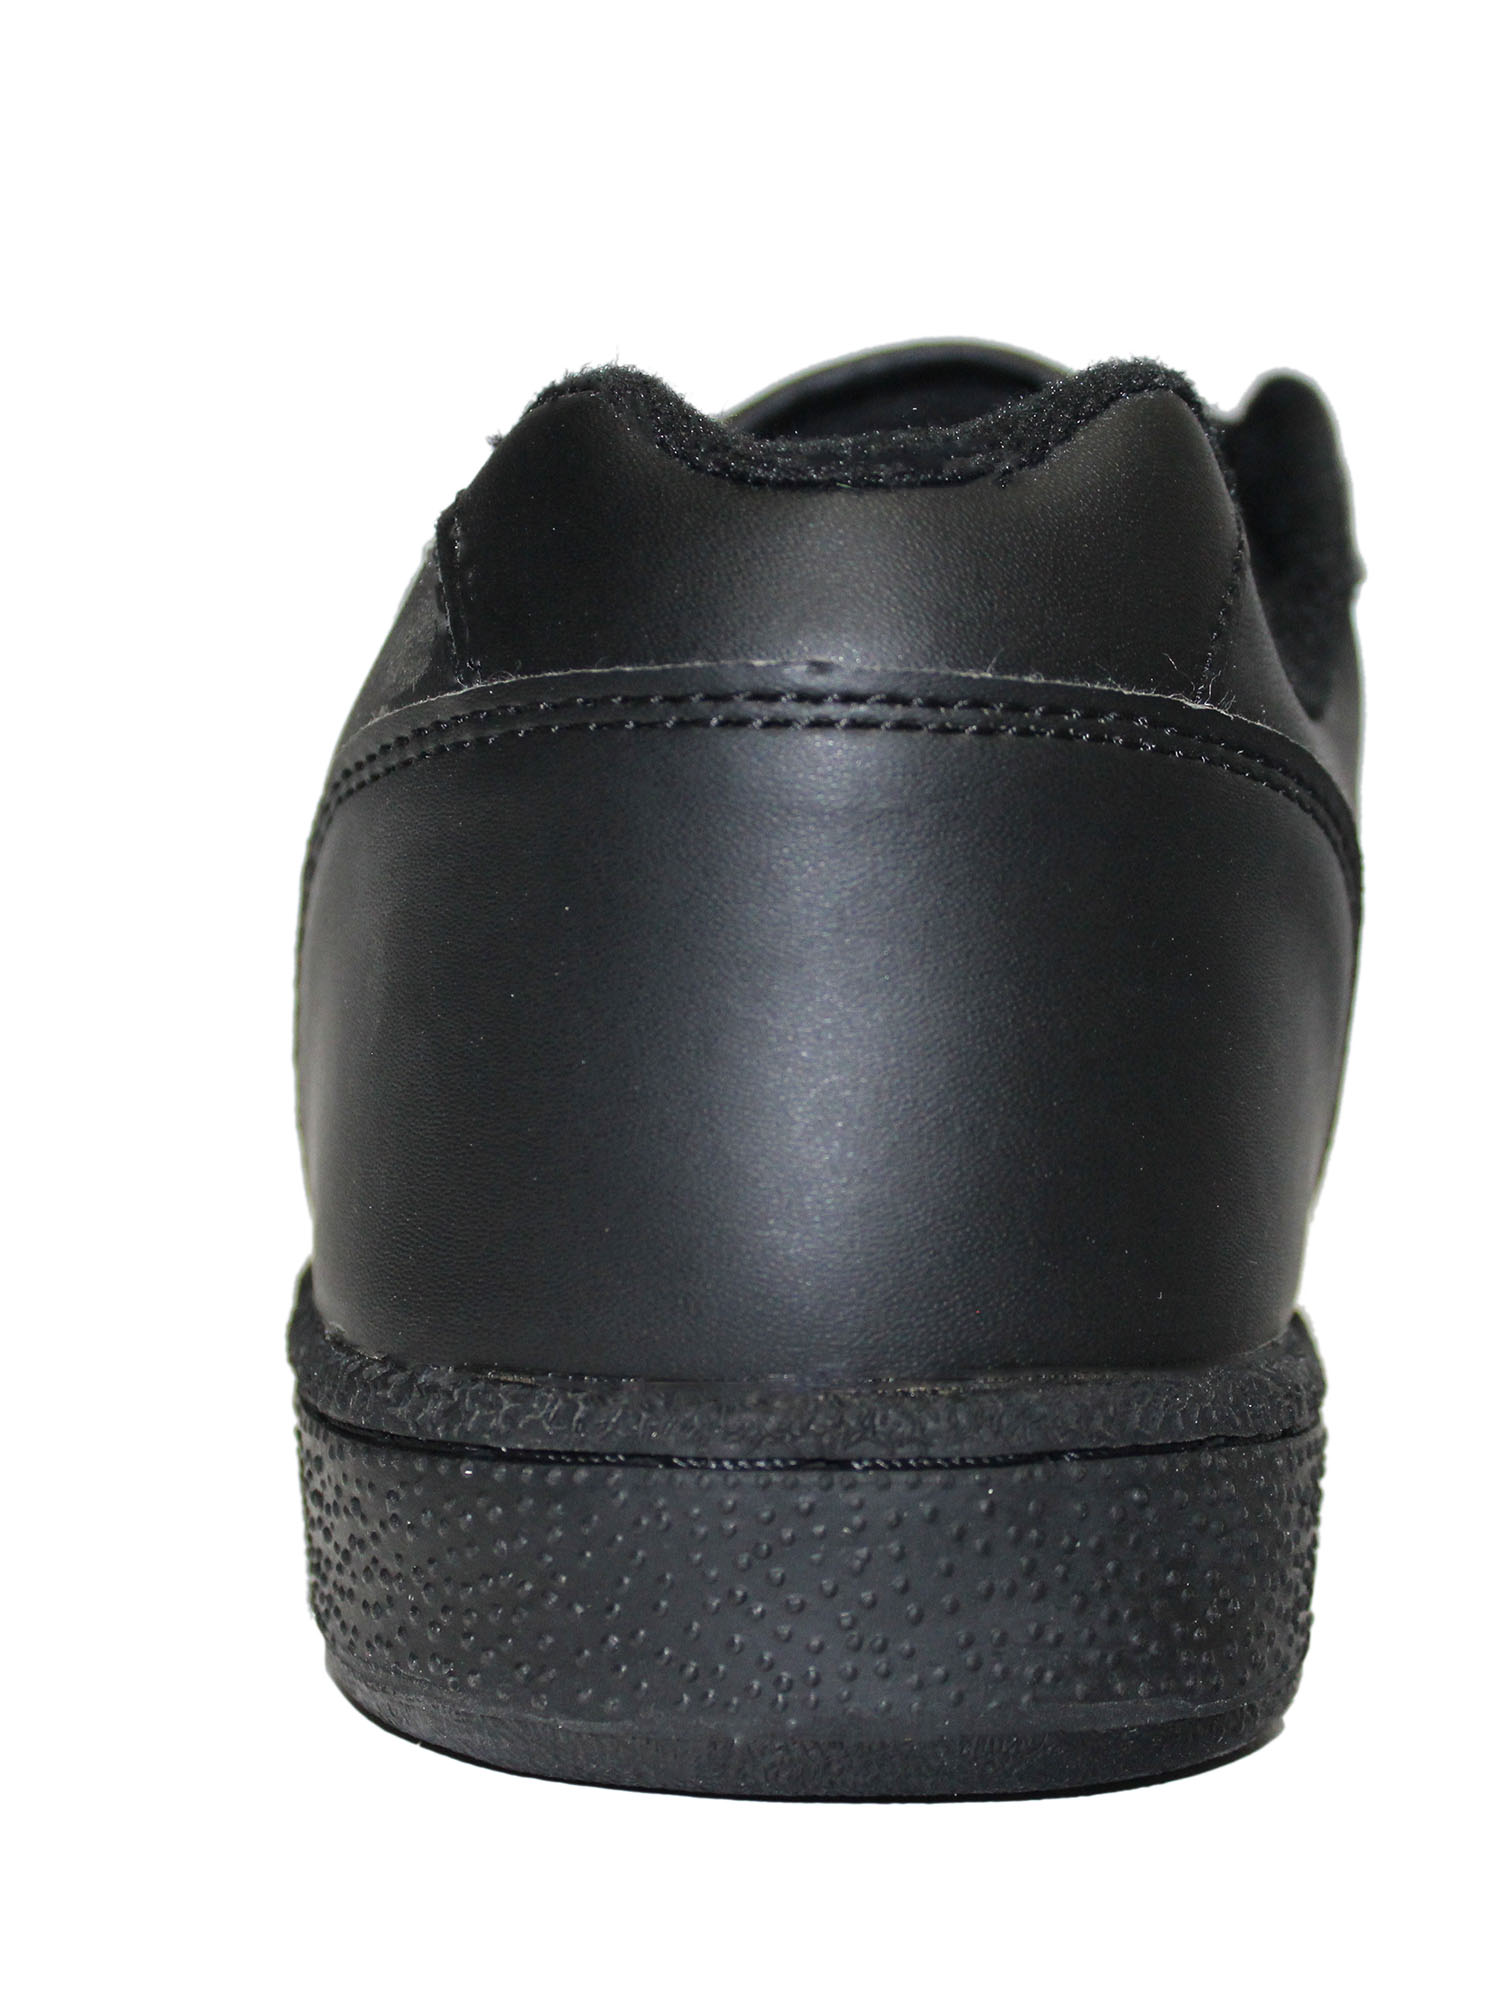 Tanleewa Men's Leather Strap Sneakers Lightweight Hook and Loop Walking Shoe Size 8.5 Adult Male - image 4 of 4